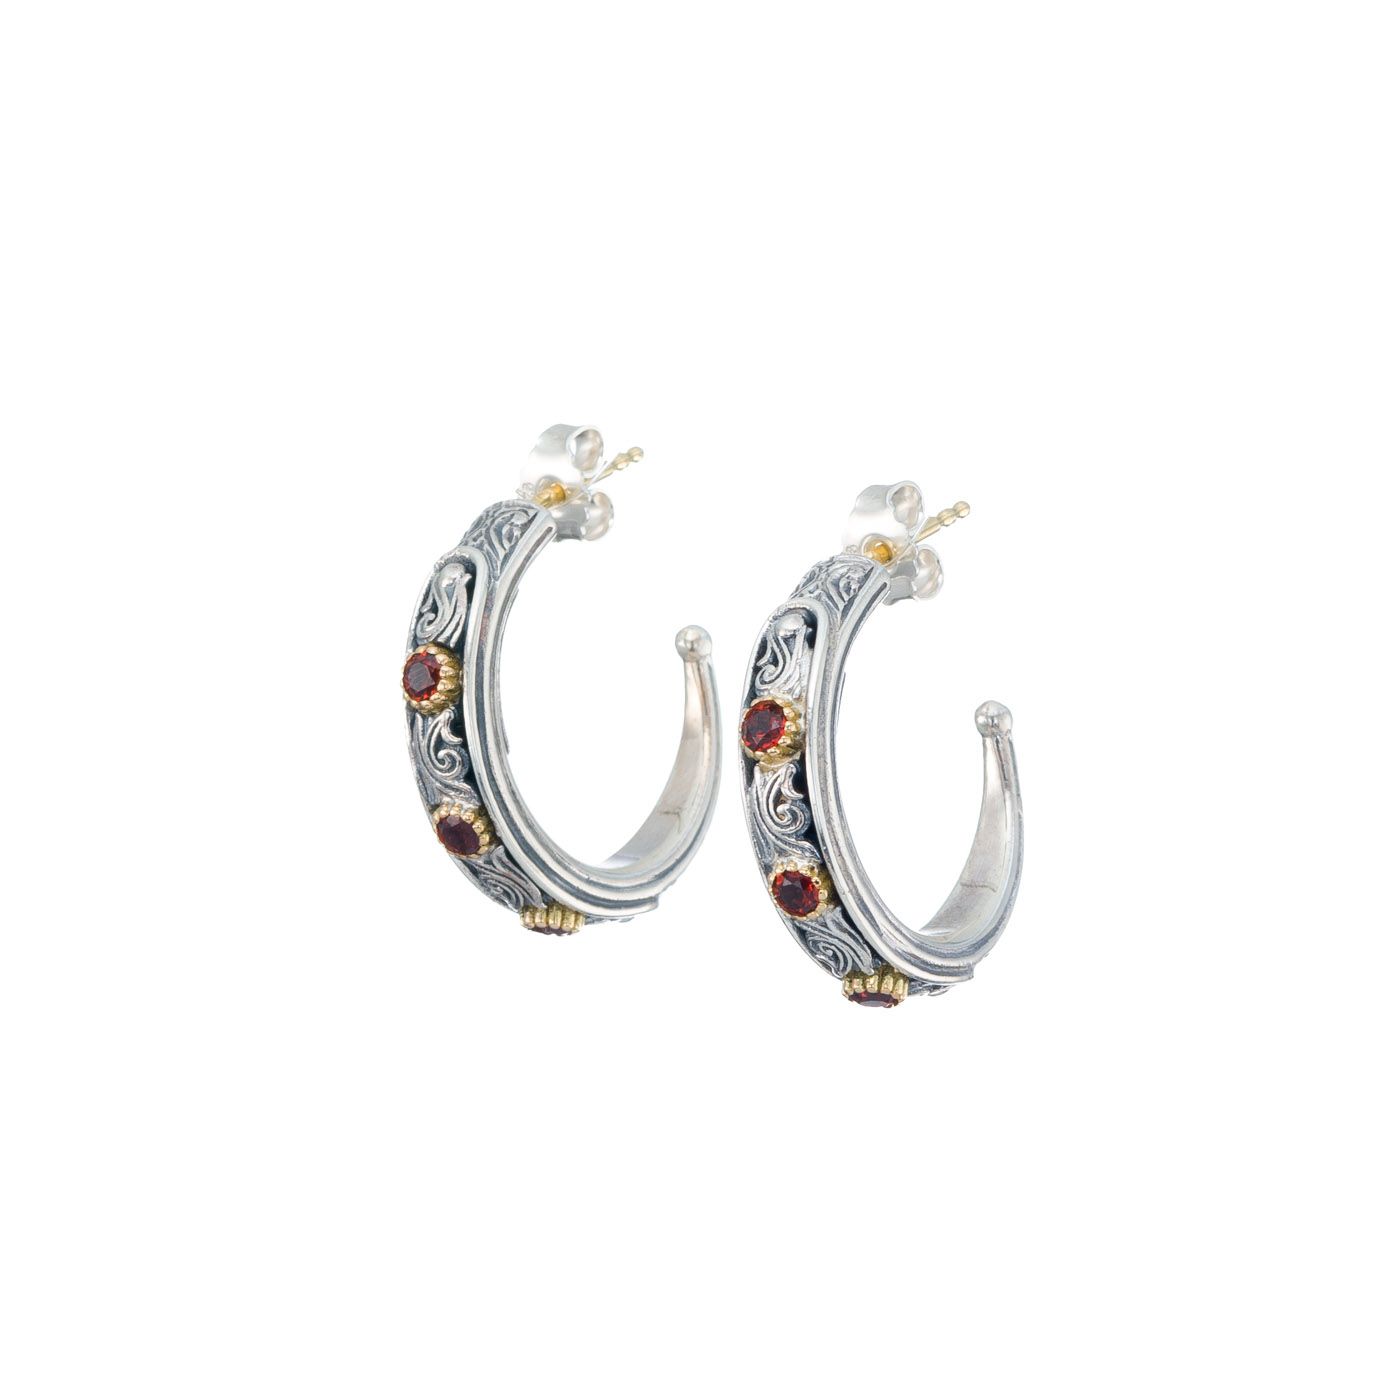 Nefeli hoops Earrings in 18K Gold and sterling silver with garnet